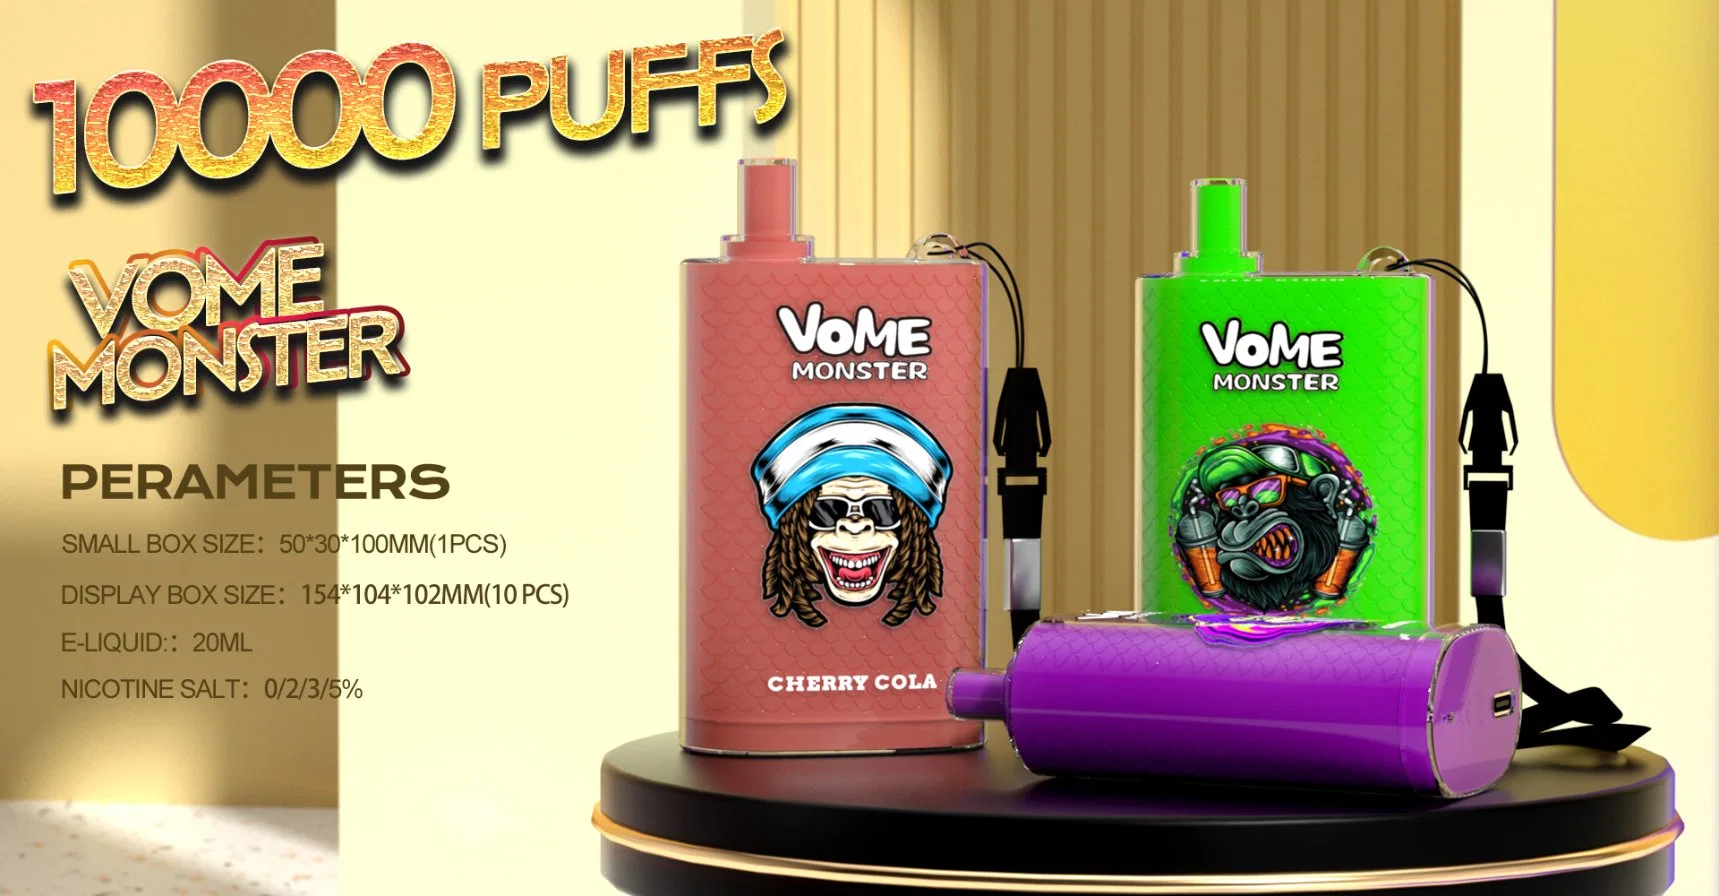 Fumot Authentic Manufacturer Vome Monster 10000 Air-Adjustable Mesh Coil Wholesale Disposable Vape